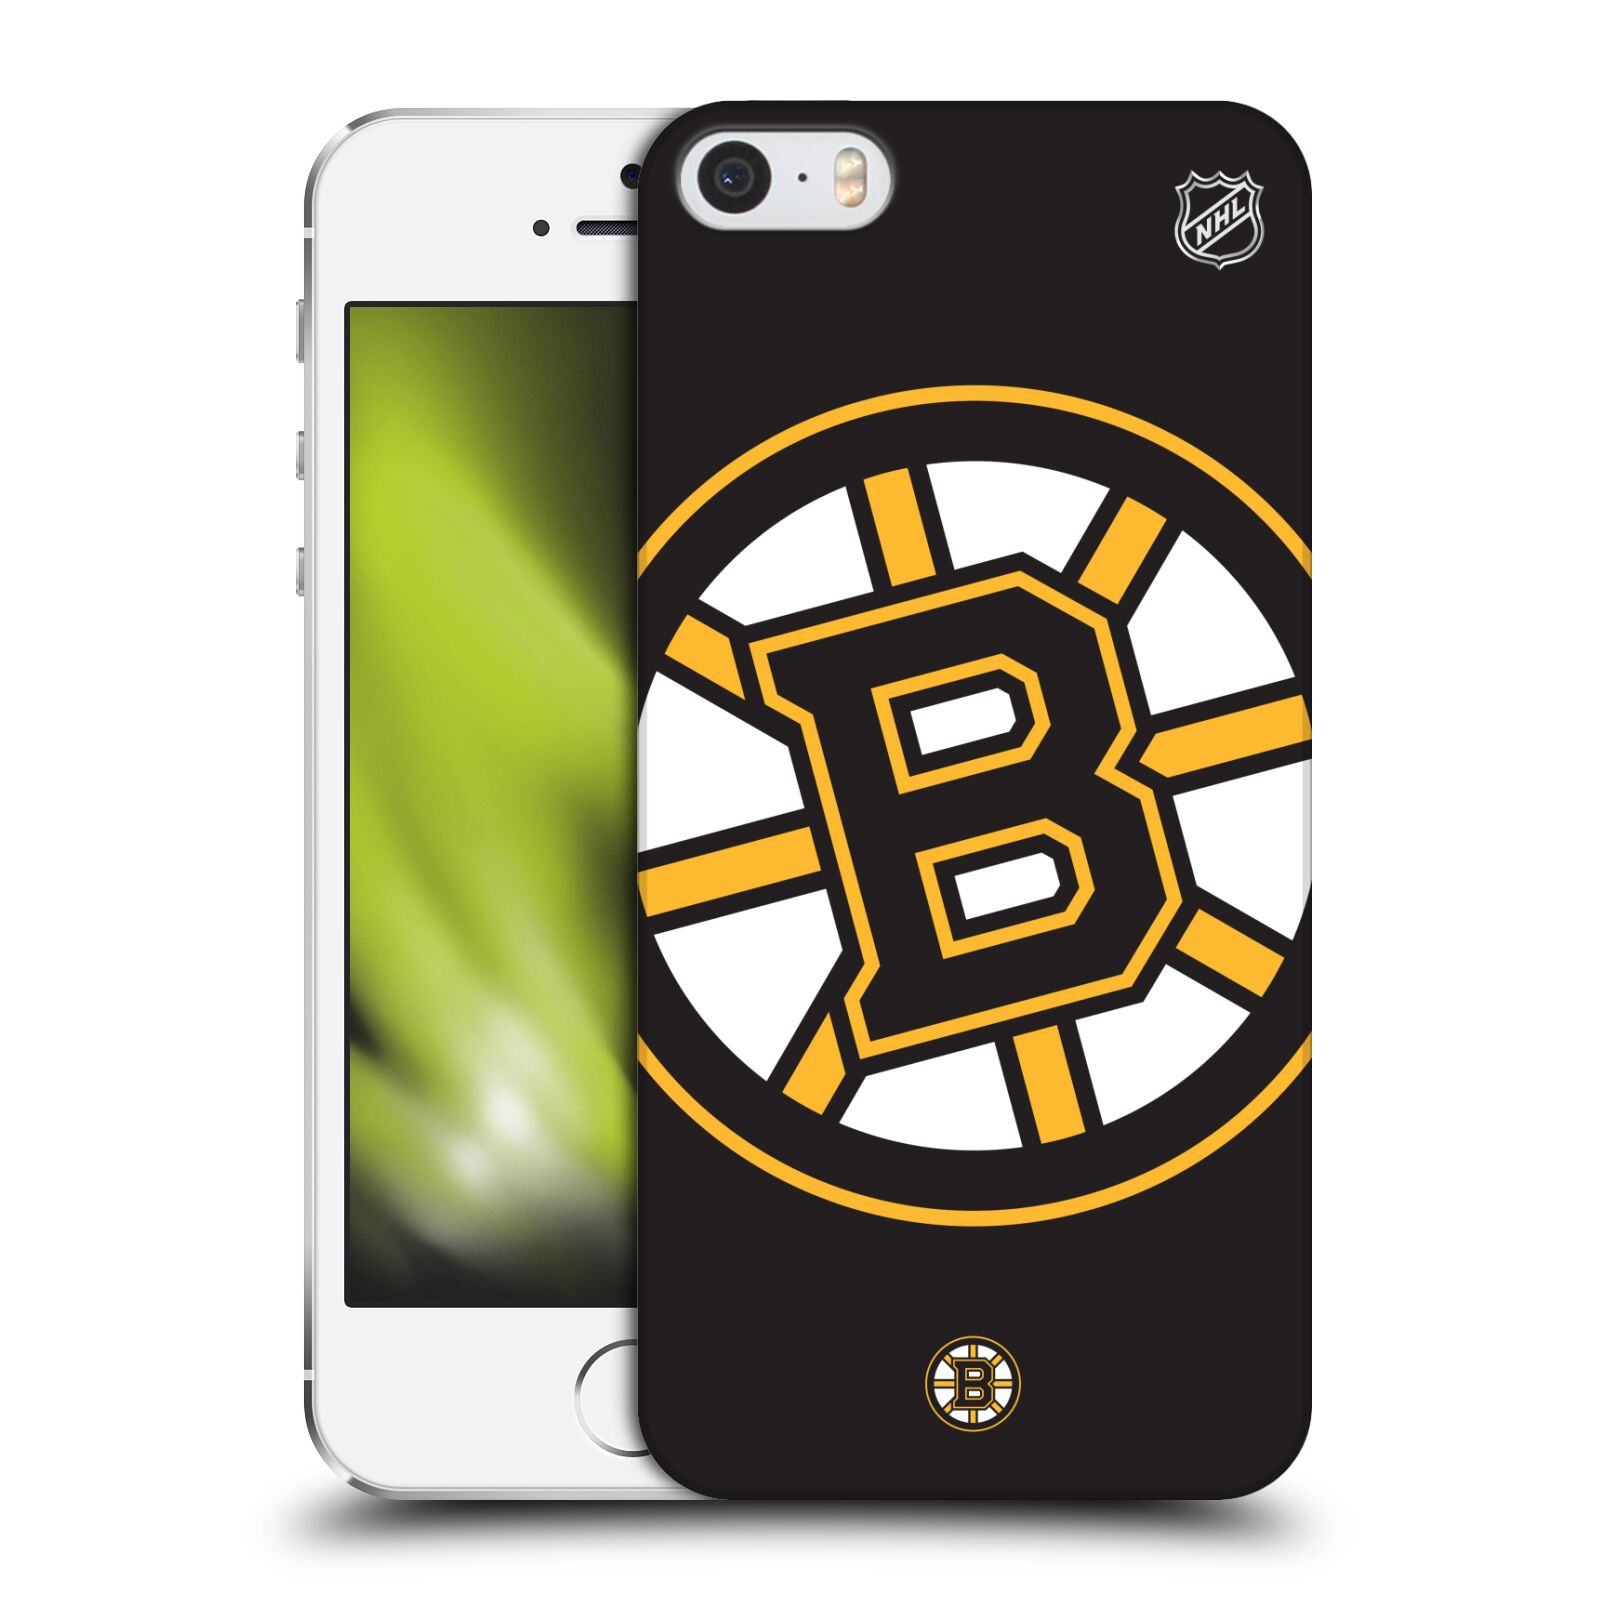 Pouzdro na mobil Apple Iphone SE - HEAD CASE - Hokej NHL - Boston Bruins - velký znak